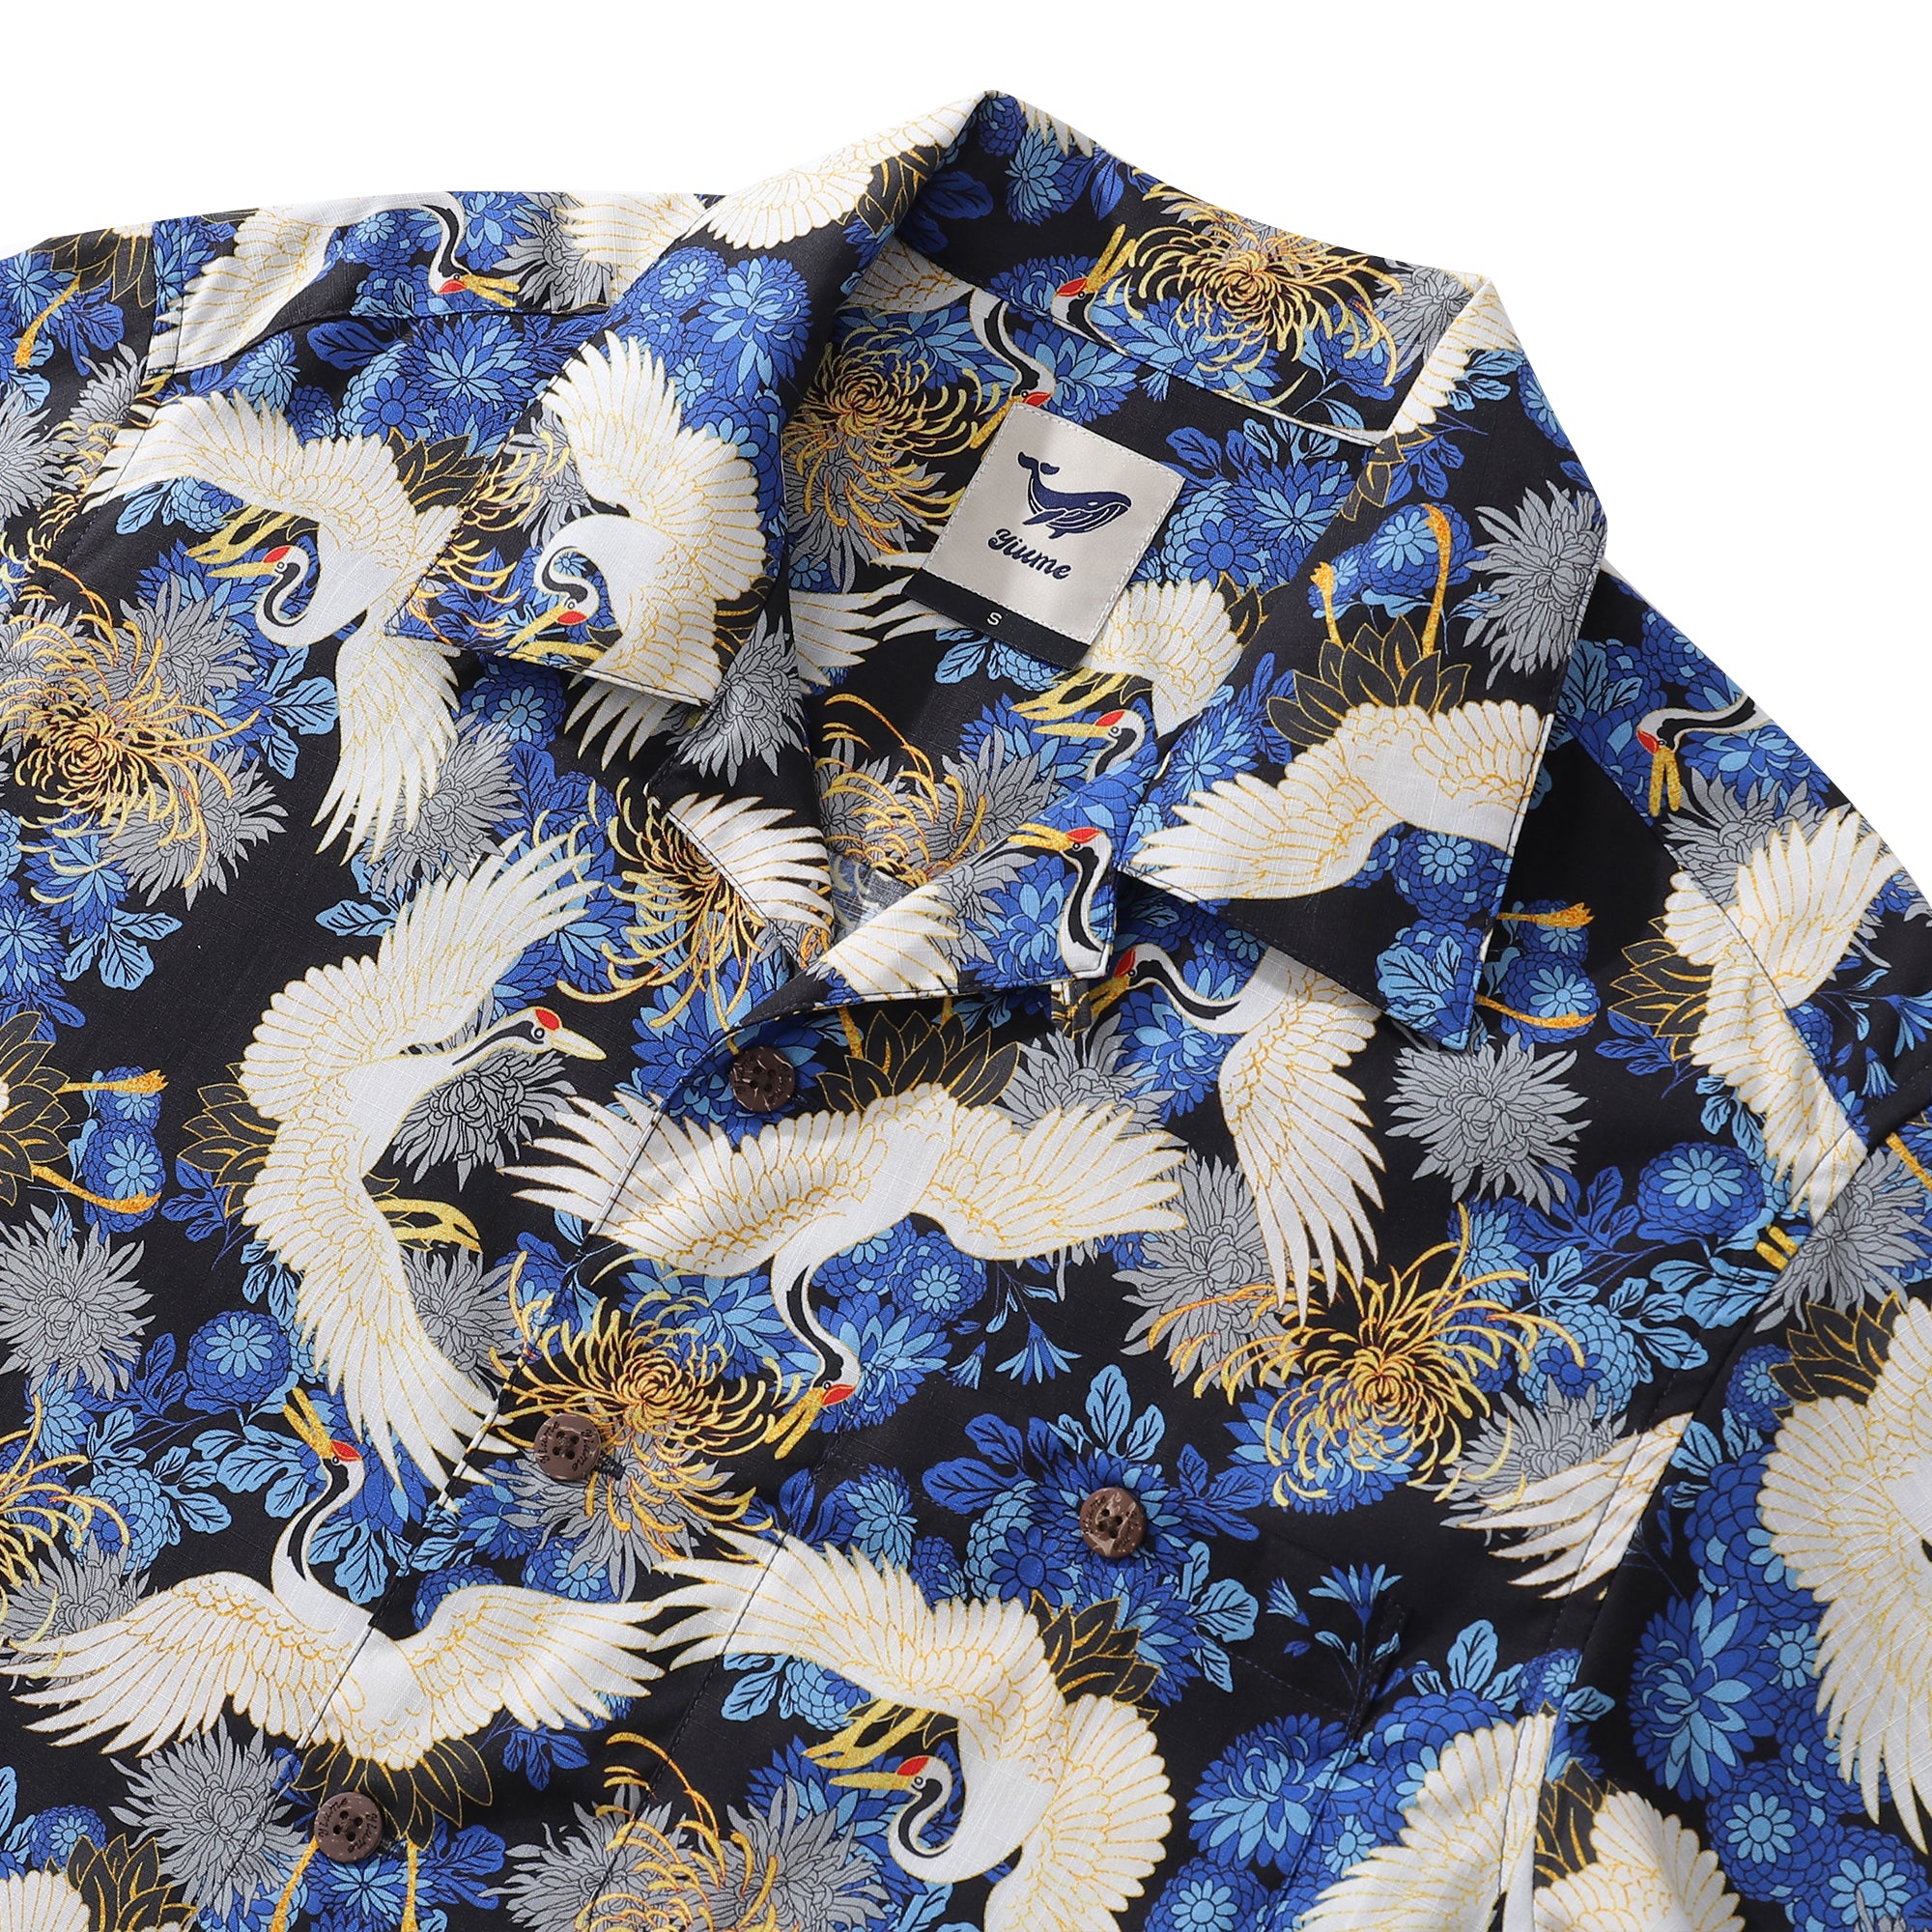 100% Cotton Hawaiian Shirt For Men Crane Camp Collar Shirt